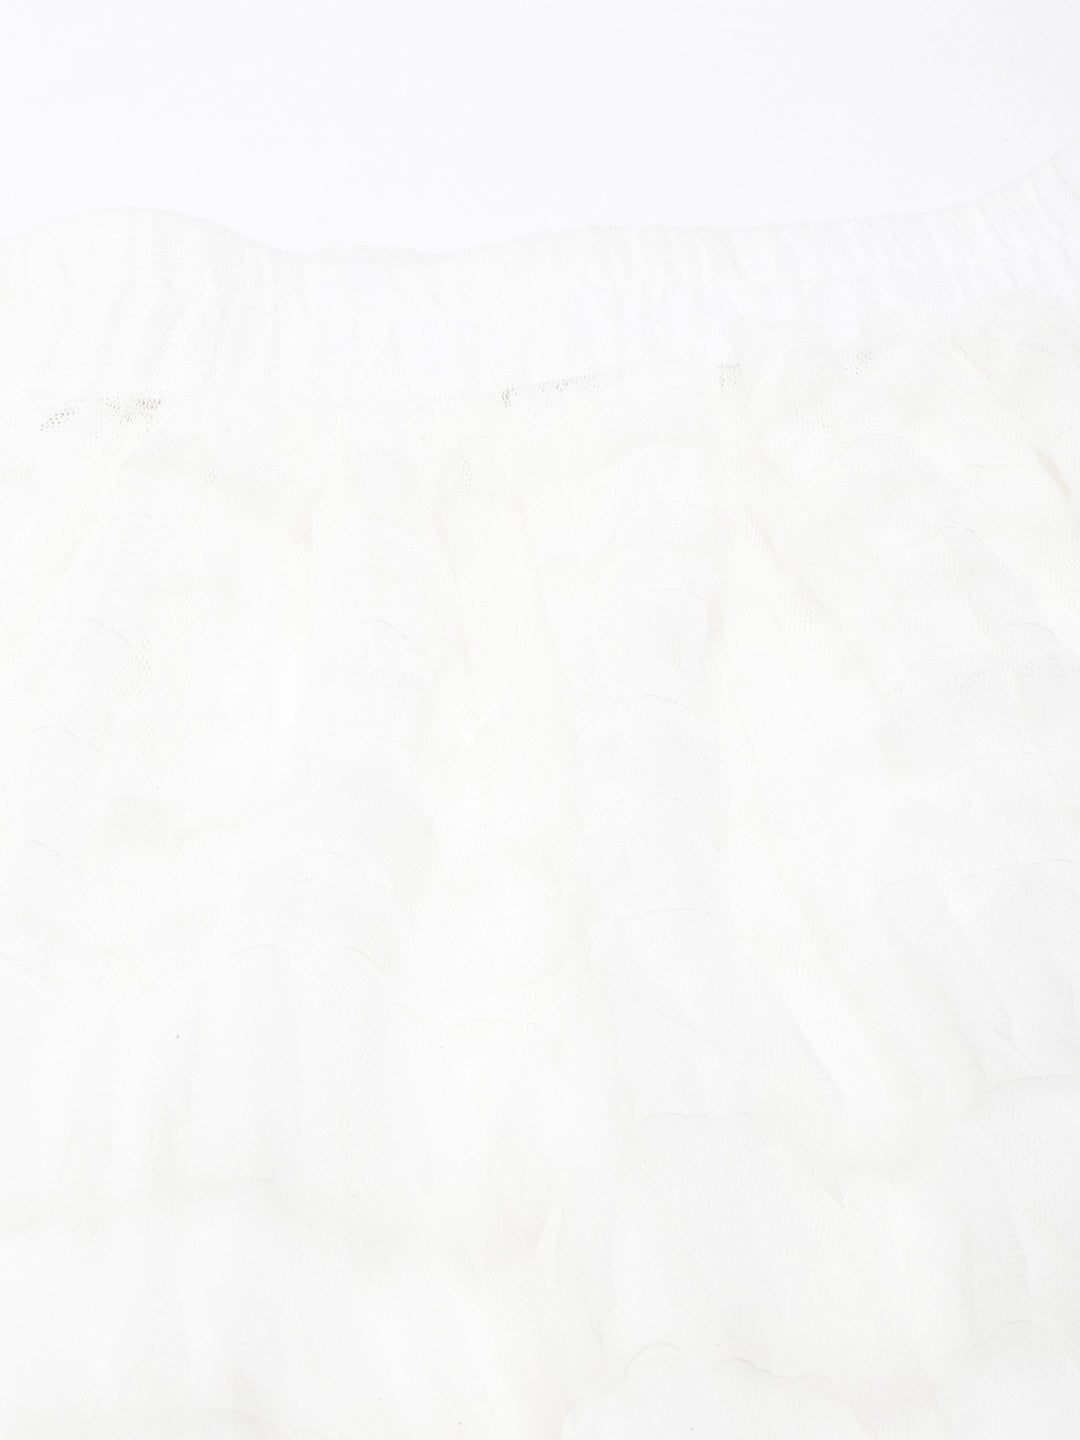 Women Solid White Tiered Midi Skirt